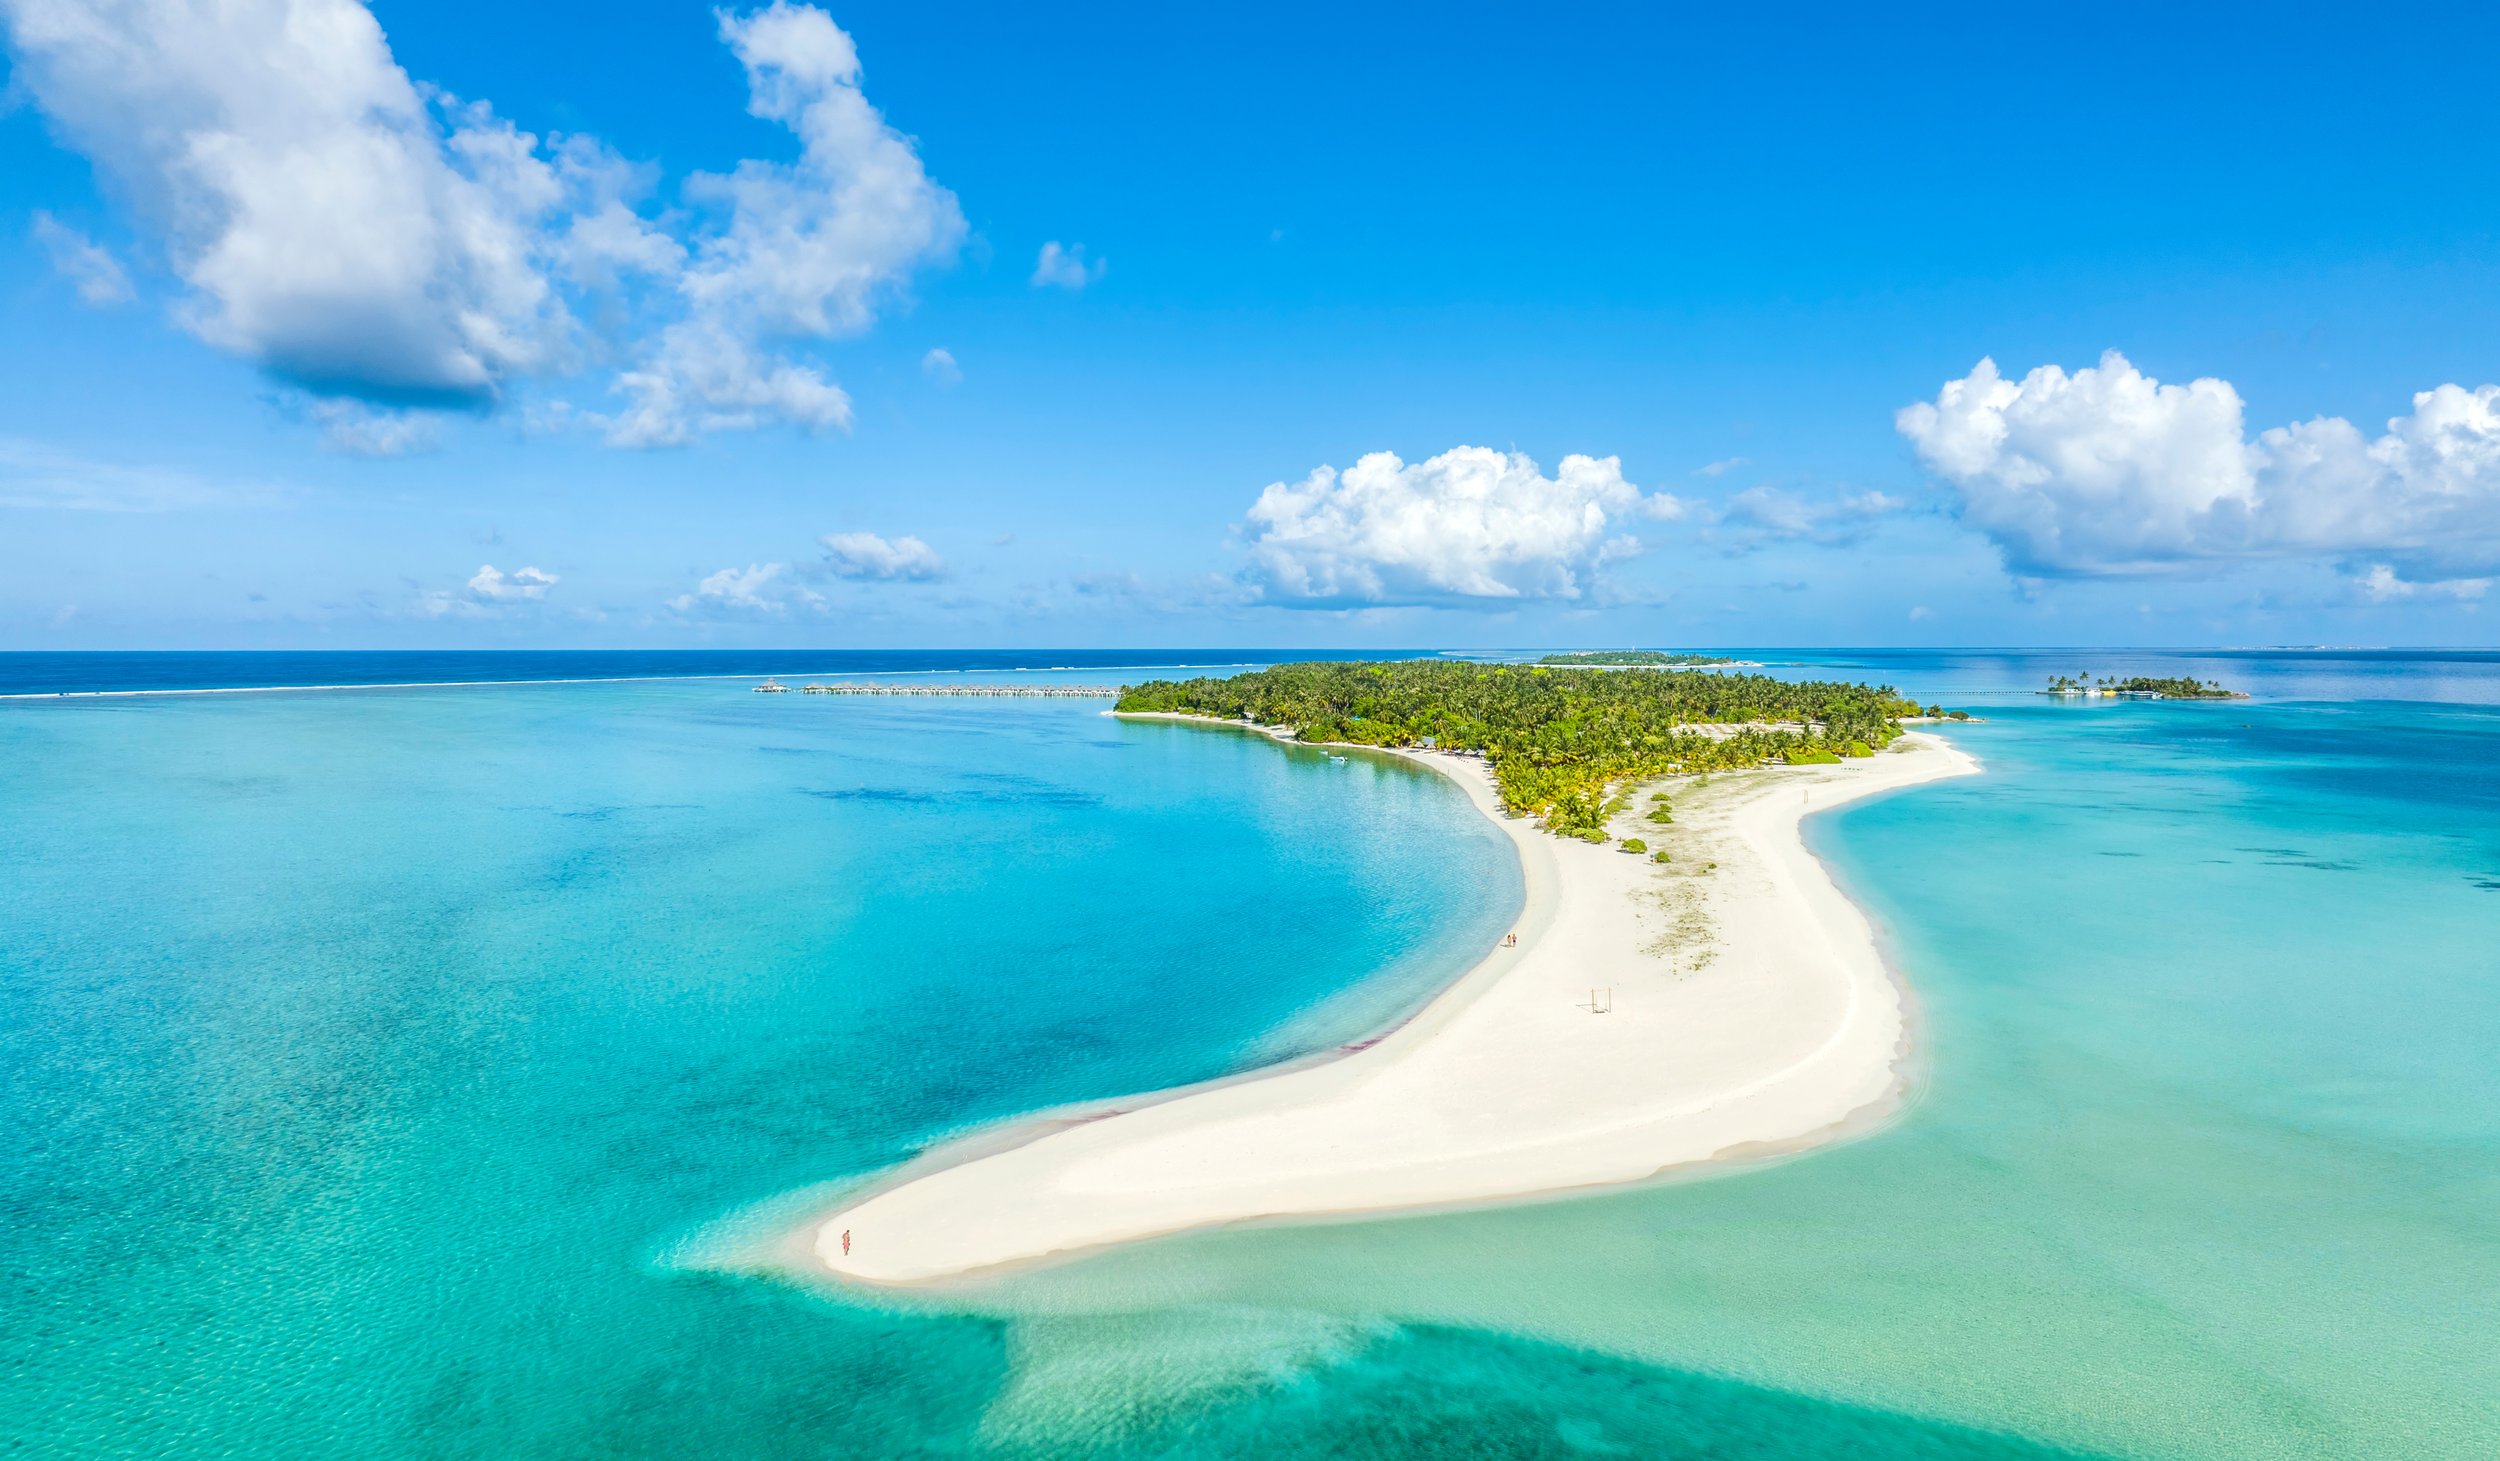 B.V.I, Bahamas, OtherCaribbean Jurisdictionsand OECD Minimum Global Tax